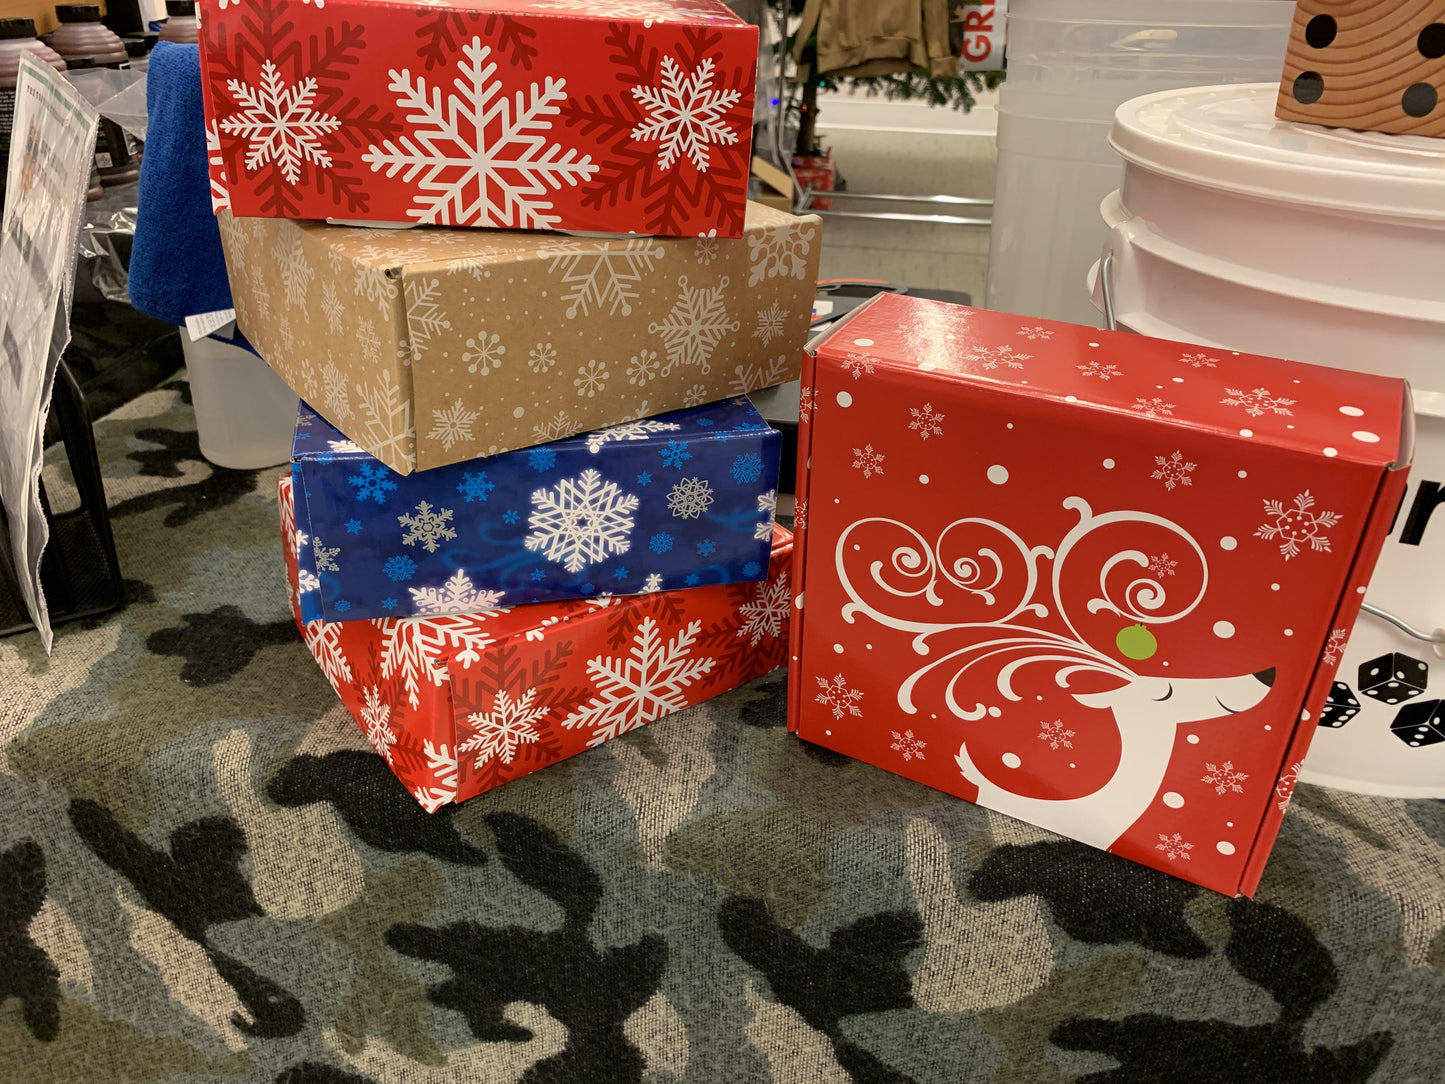 (NEW) Holiday GiftBox 6 pack sauce & 3 pack rub & seasoning variety